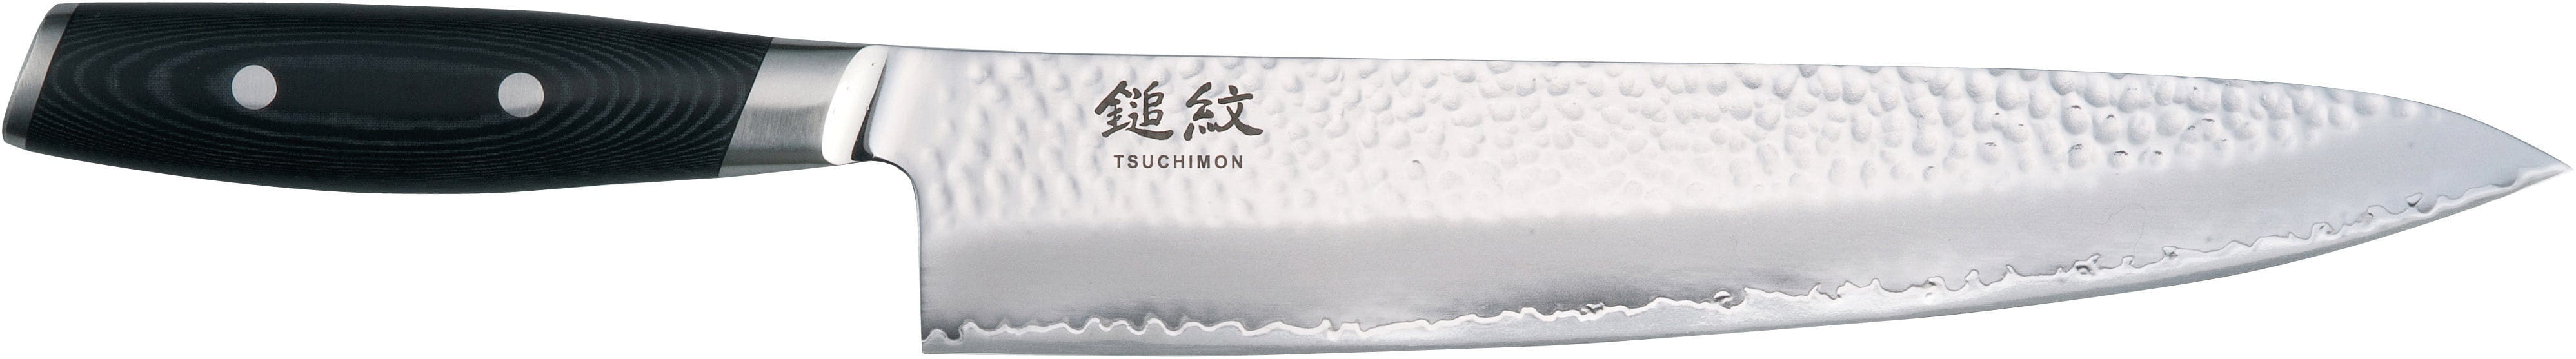 Yaxell Tsuchimon Chef's mes, 25,5 cm